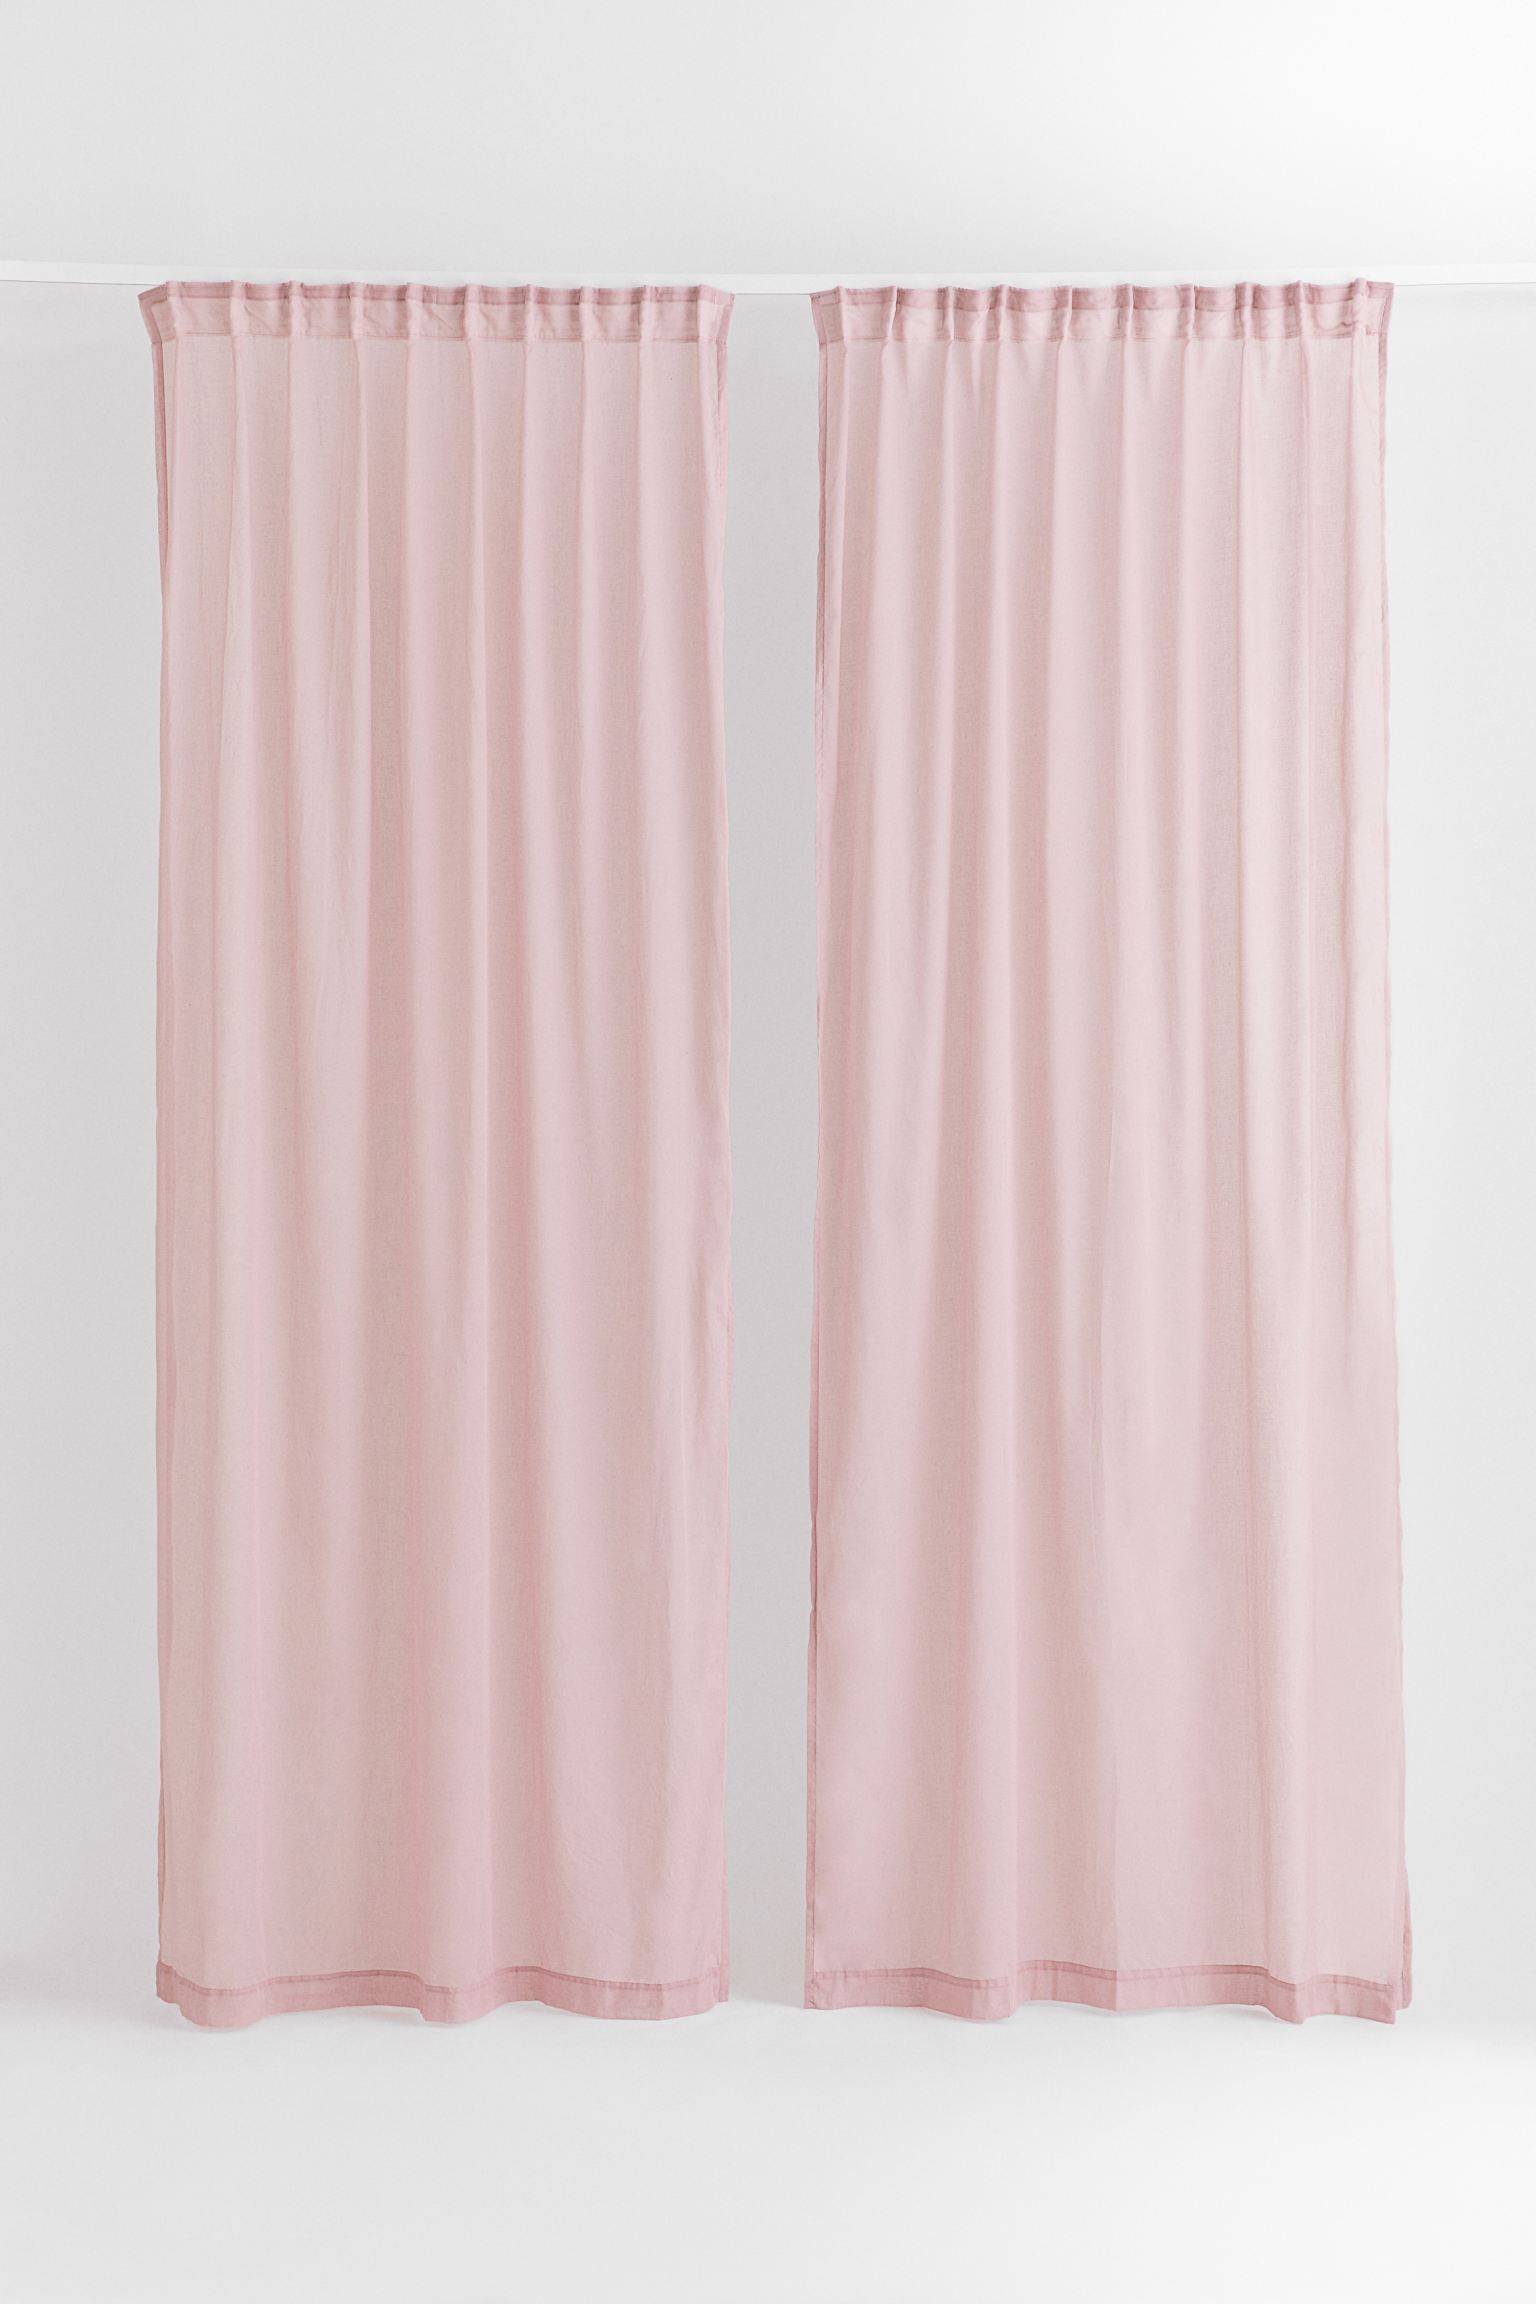 H&M Home Легкая многофункциональная штора, 2 шт., Пудрово-розовый, 120x250 1038735003 | 1038735003